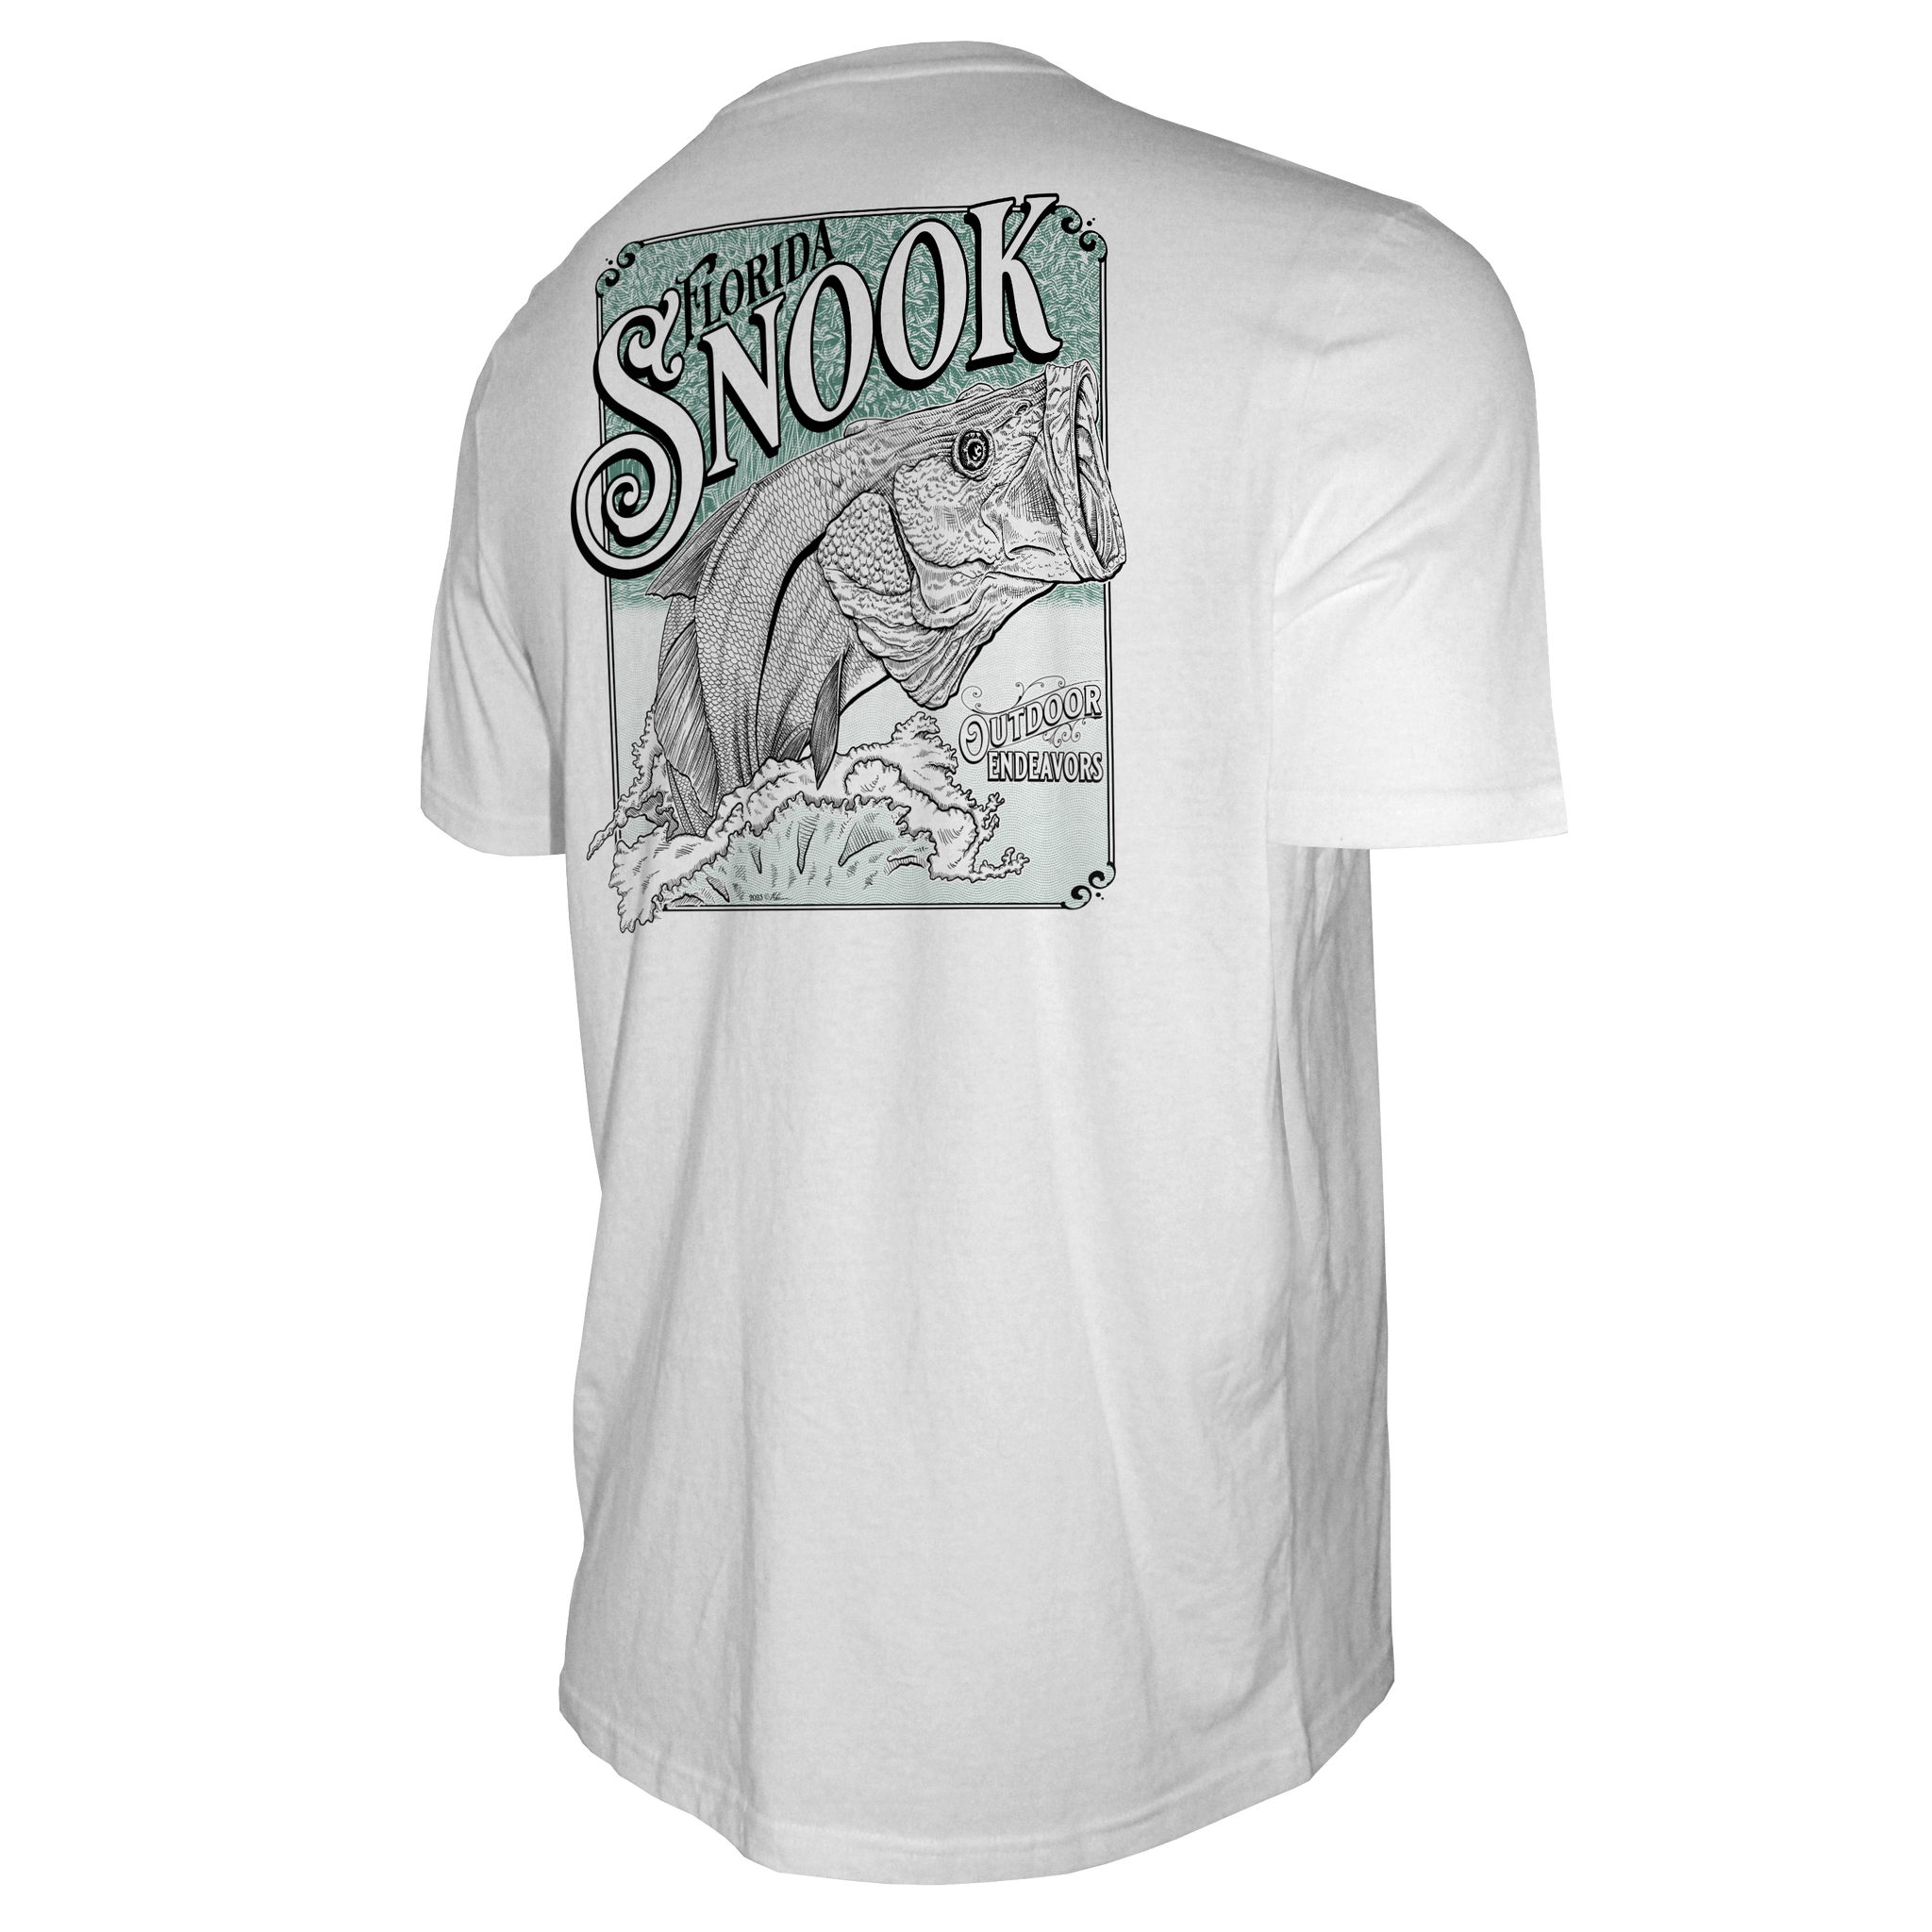 Outdoor Endeavors Classic- Short Sleeve Tee - Florida Snook